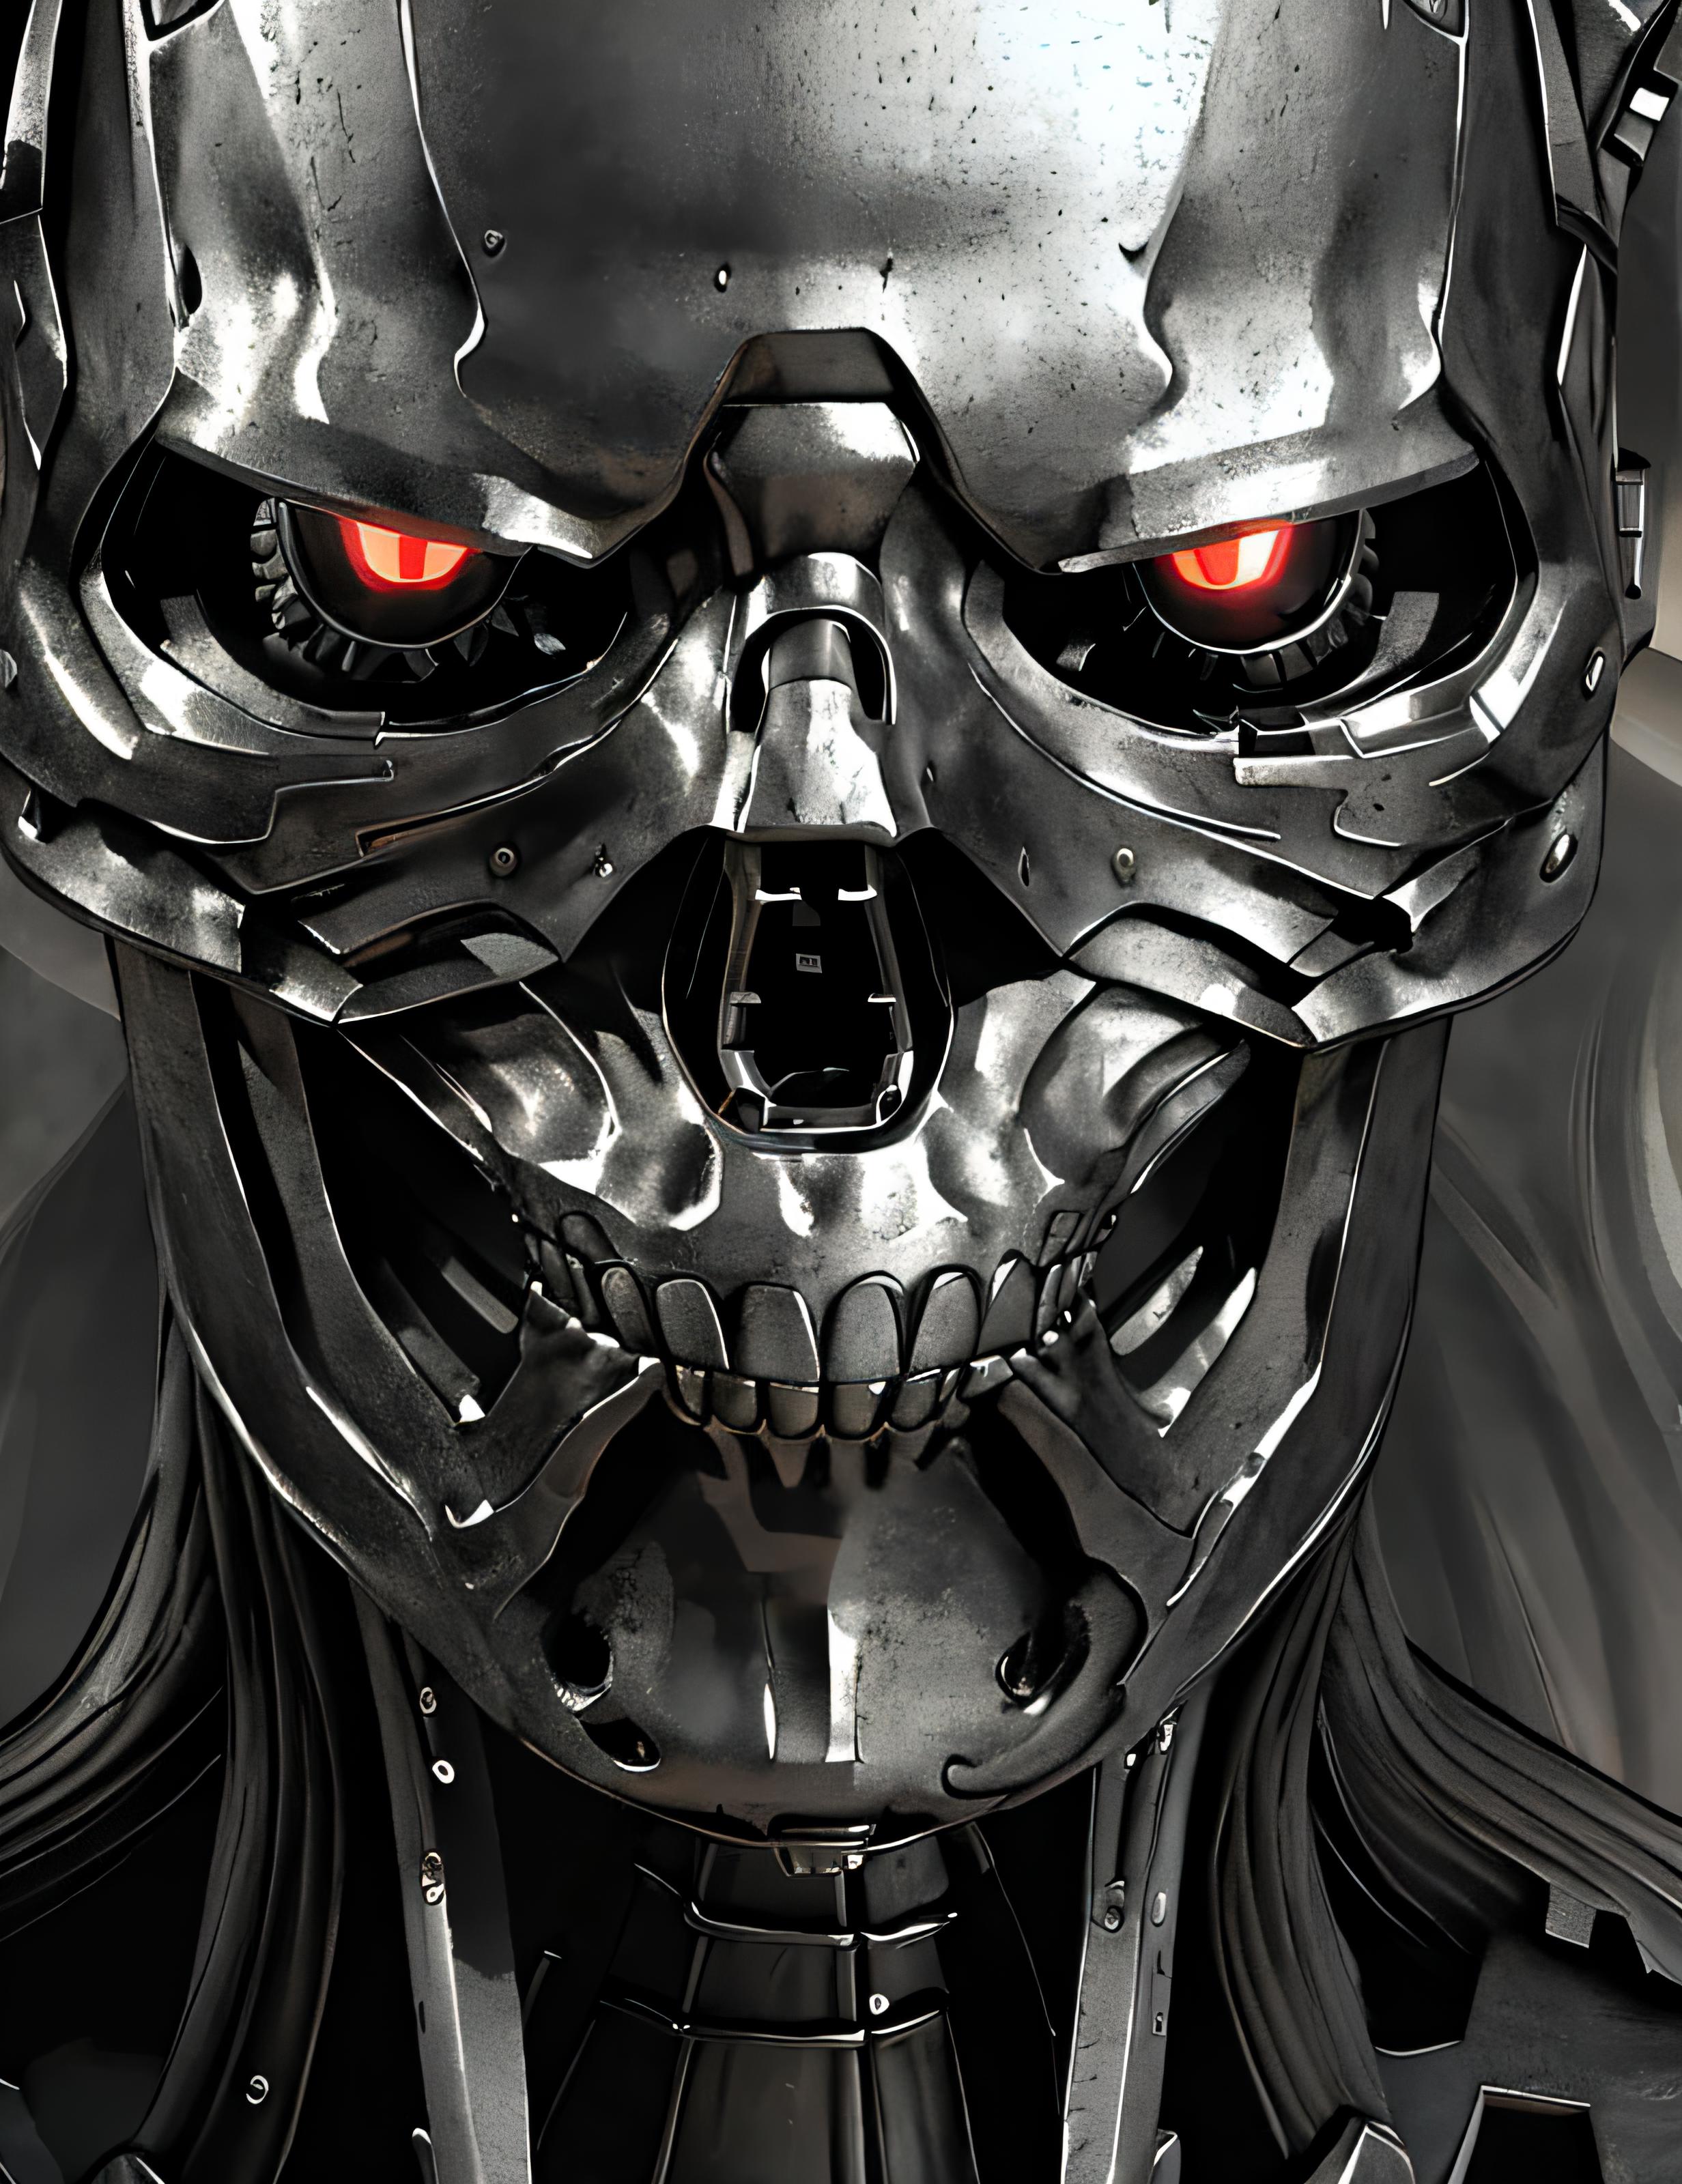 Cyborg 1.0 image by mdsavio